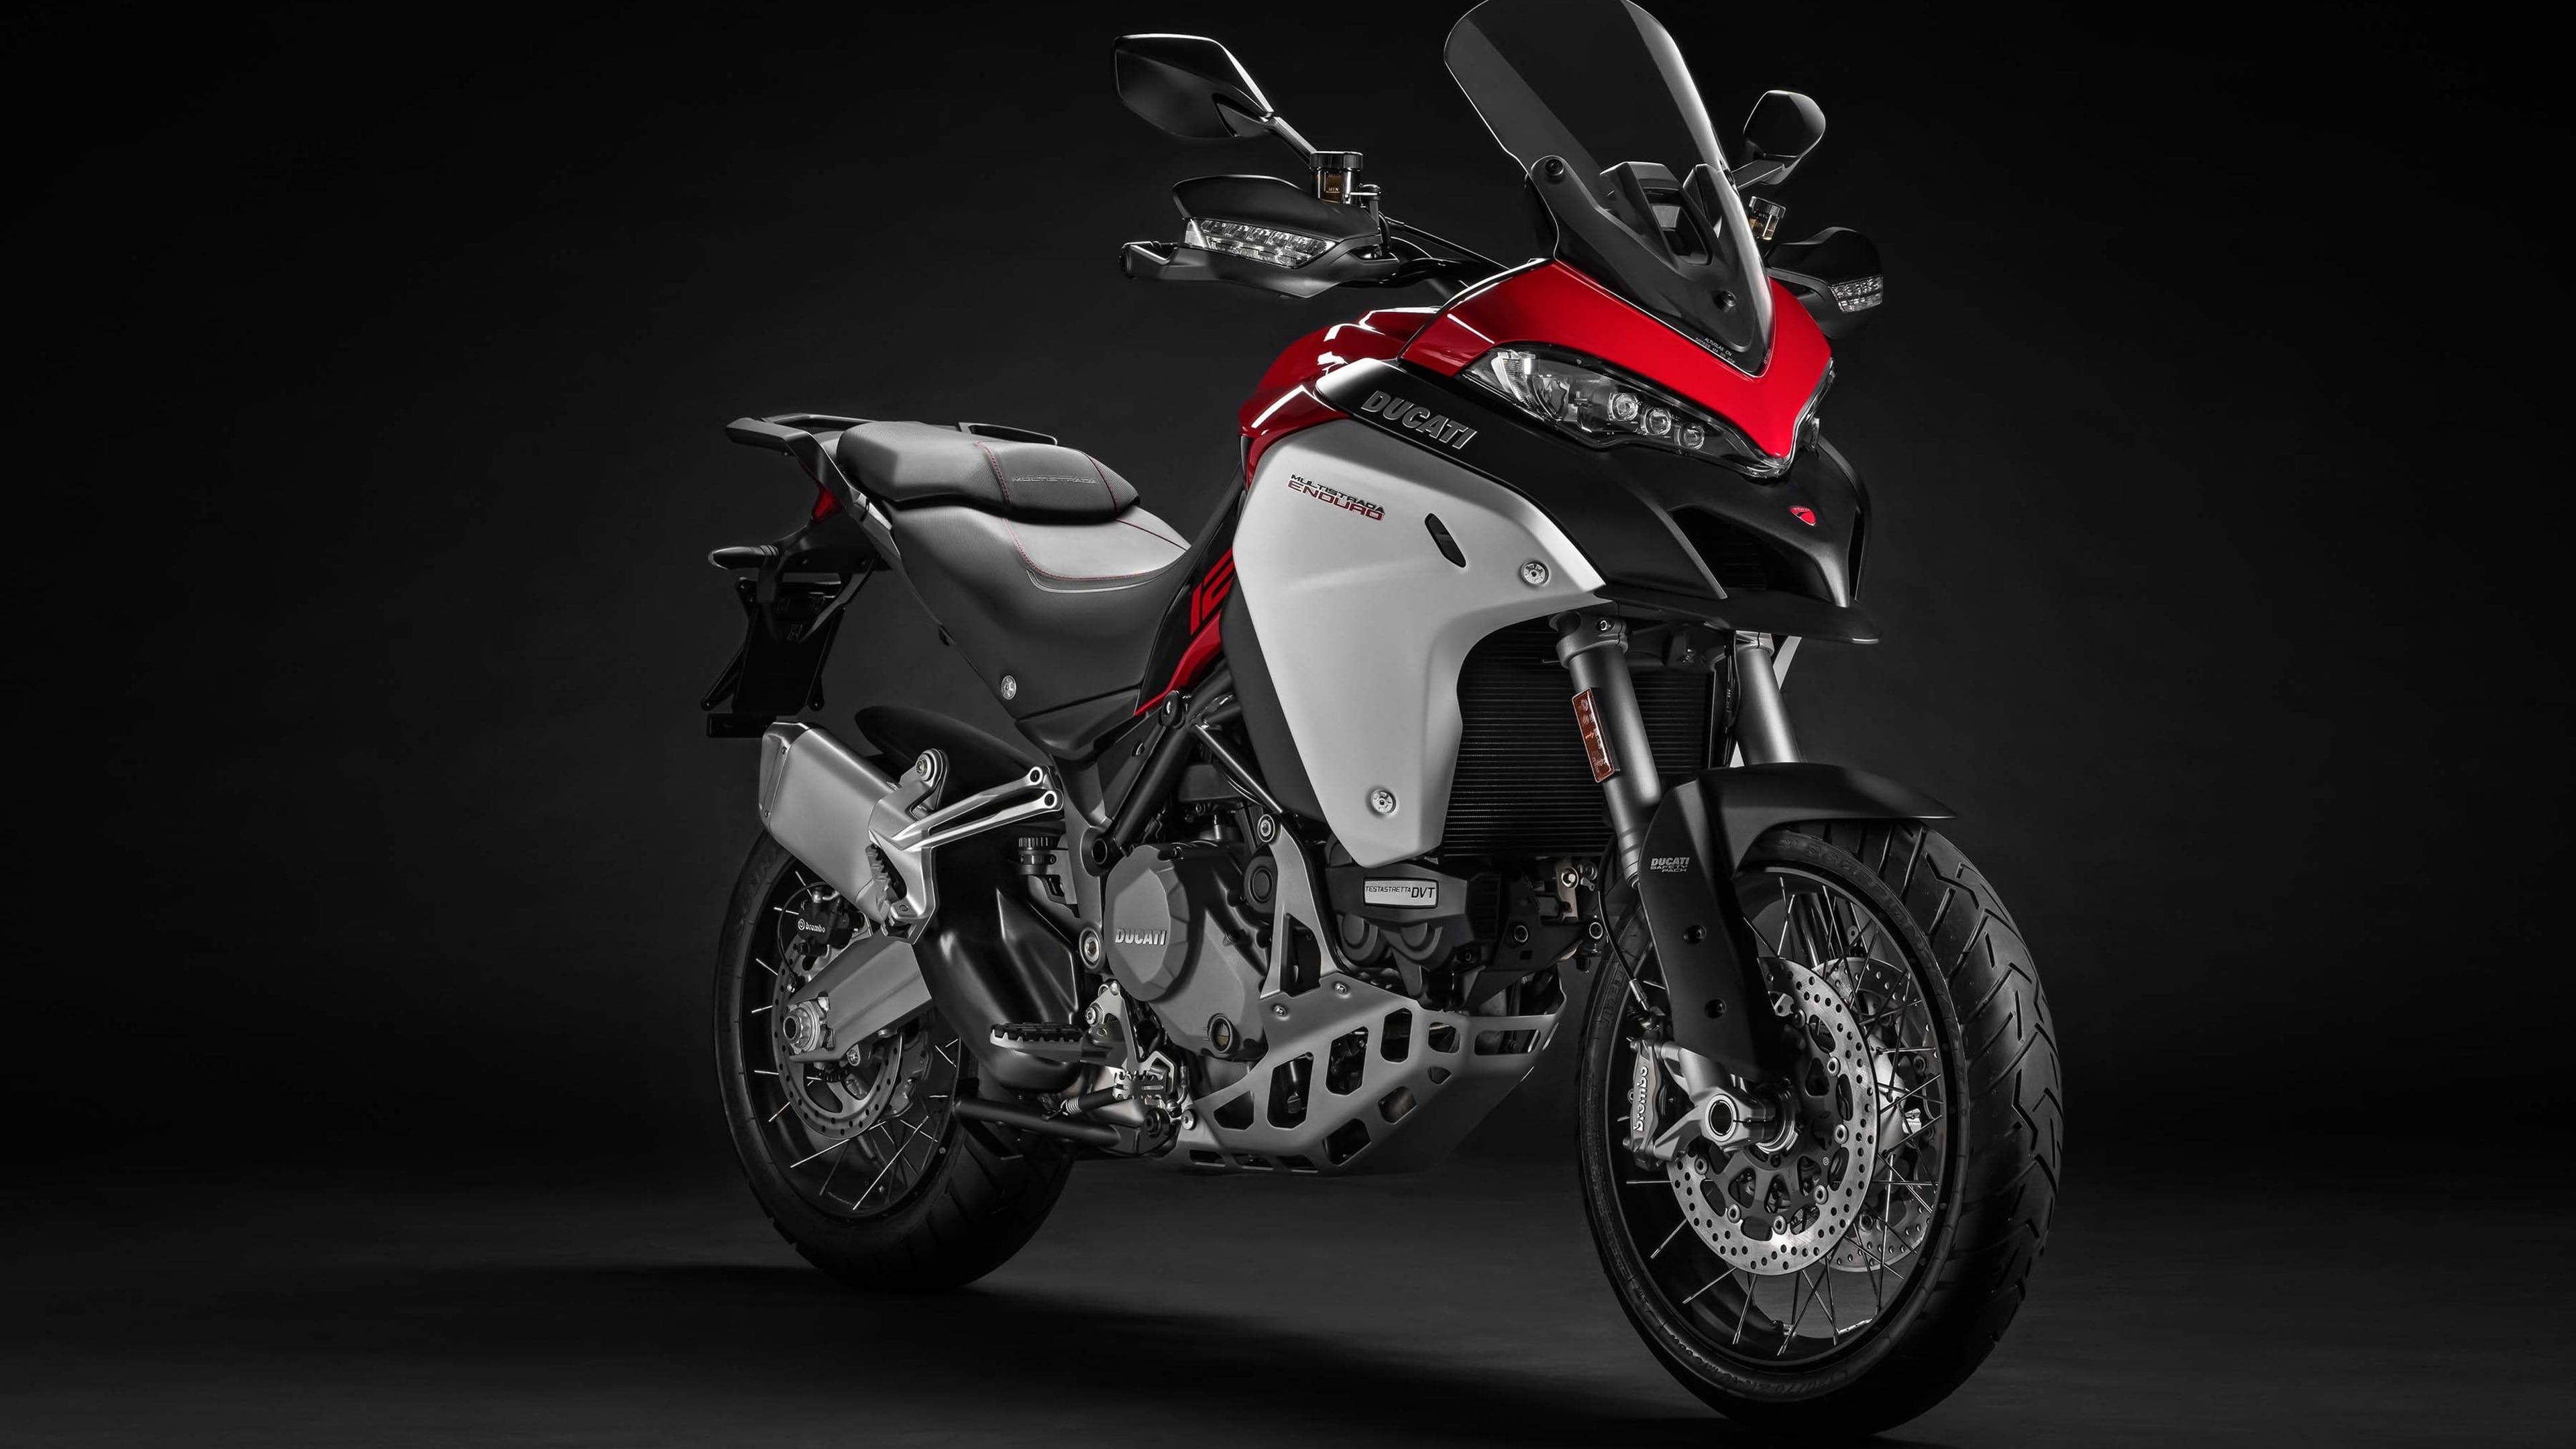 Ducati Multistrada 1260 Enduro, Adventure touring, 2019 model, High-resolution wallpaper, 3840x2160 4K Desktop